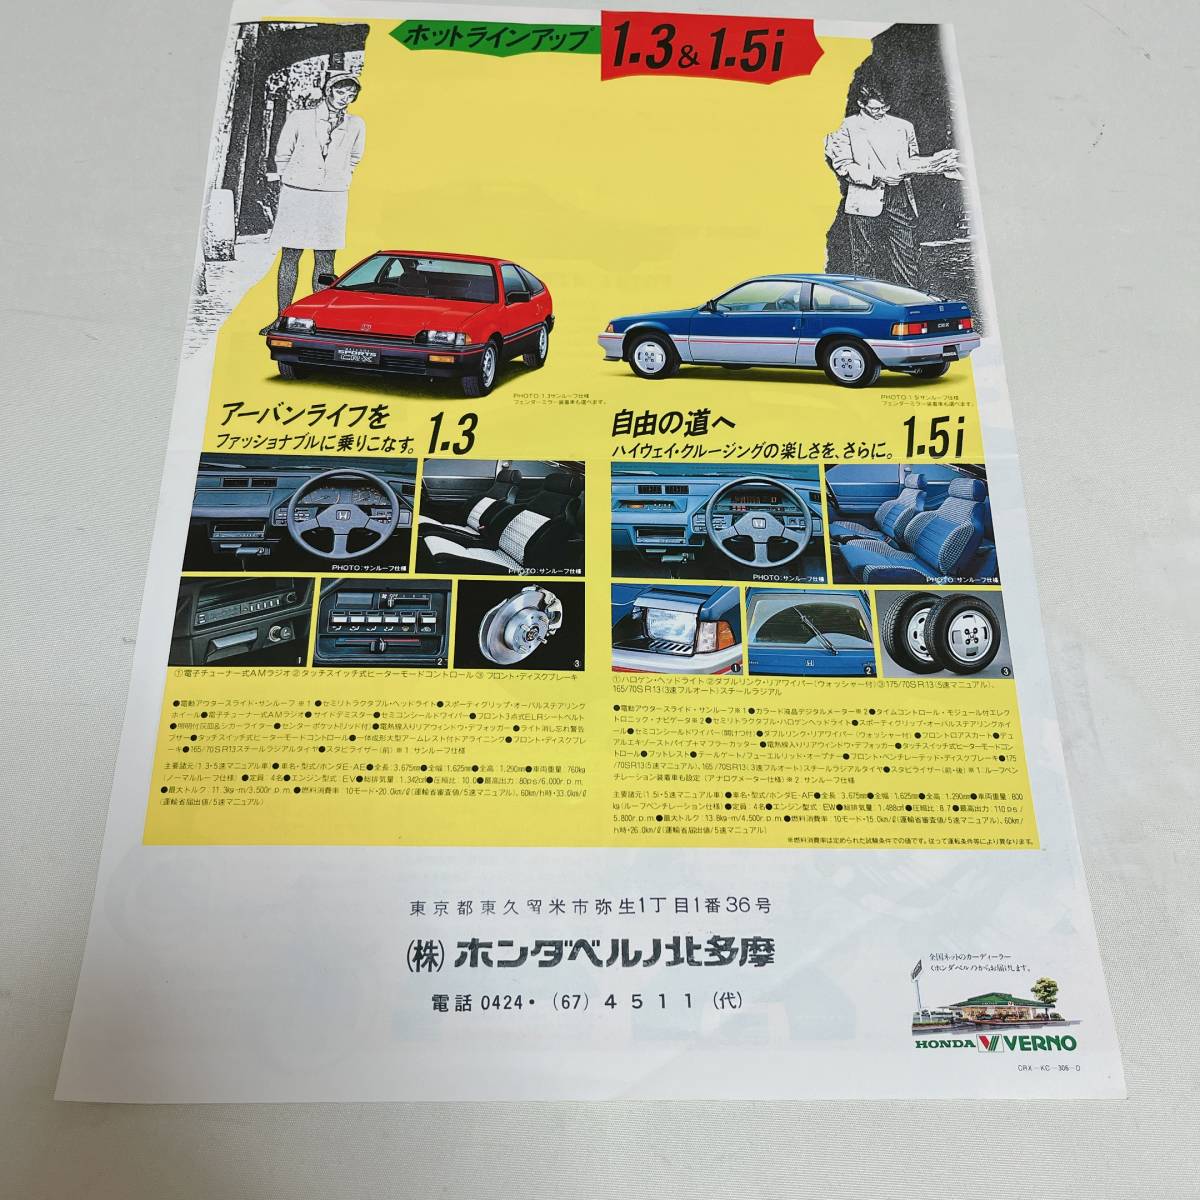  Honda Ballade спорт CR-X debut каталог 4 страница HONDA 1983.11